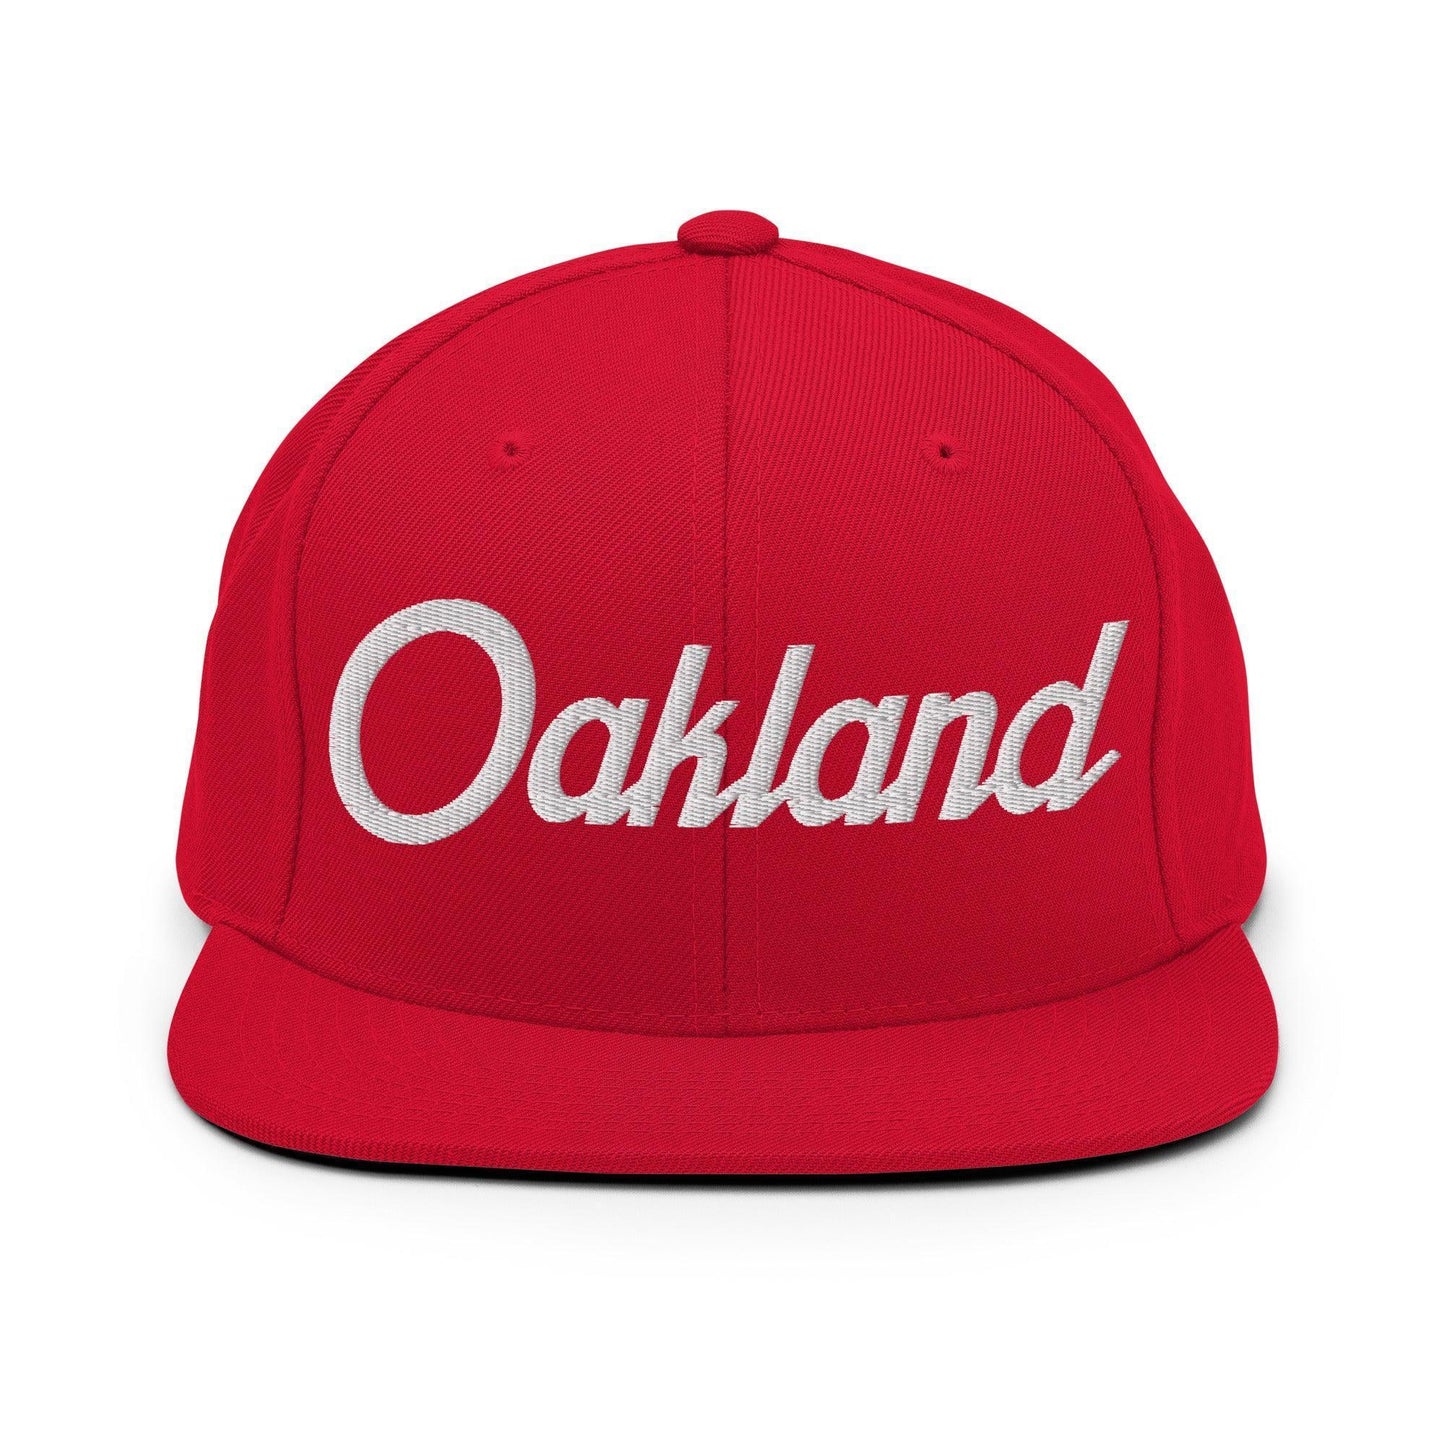 Oakland Script Snapback Hat Red